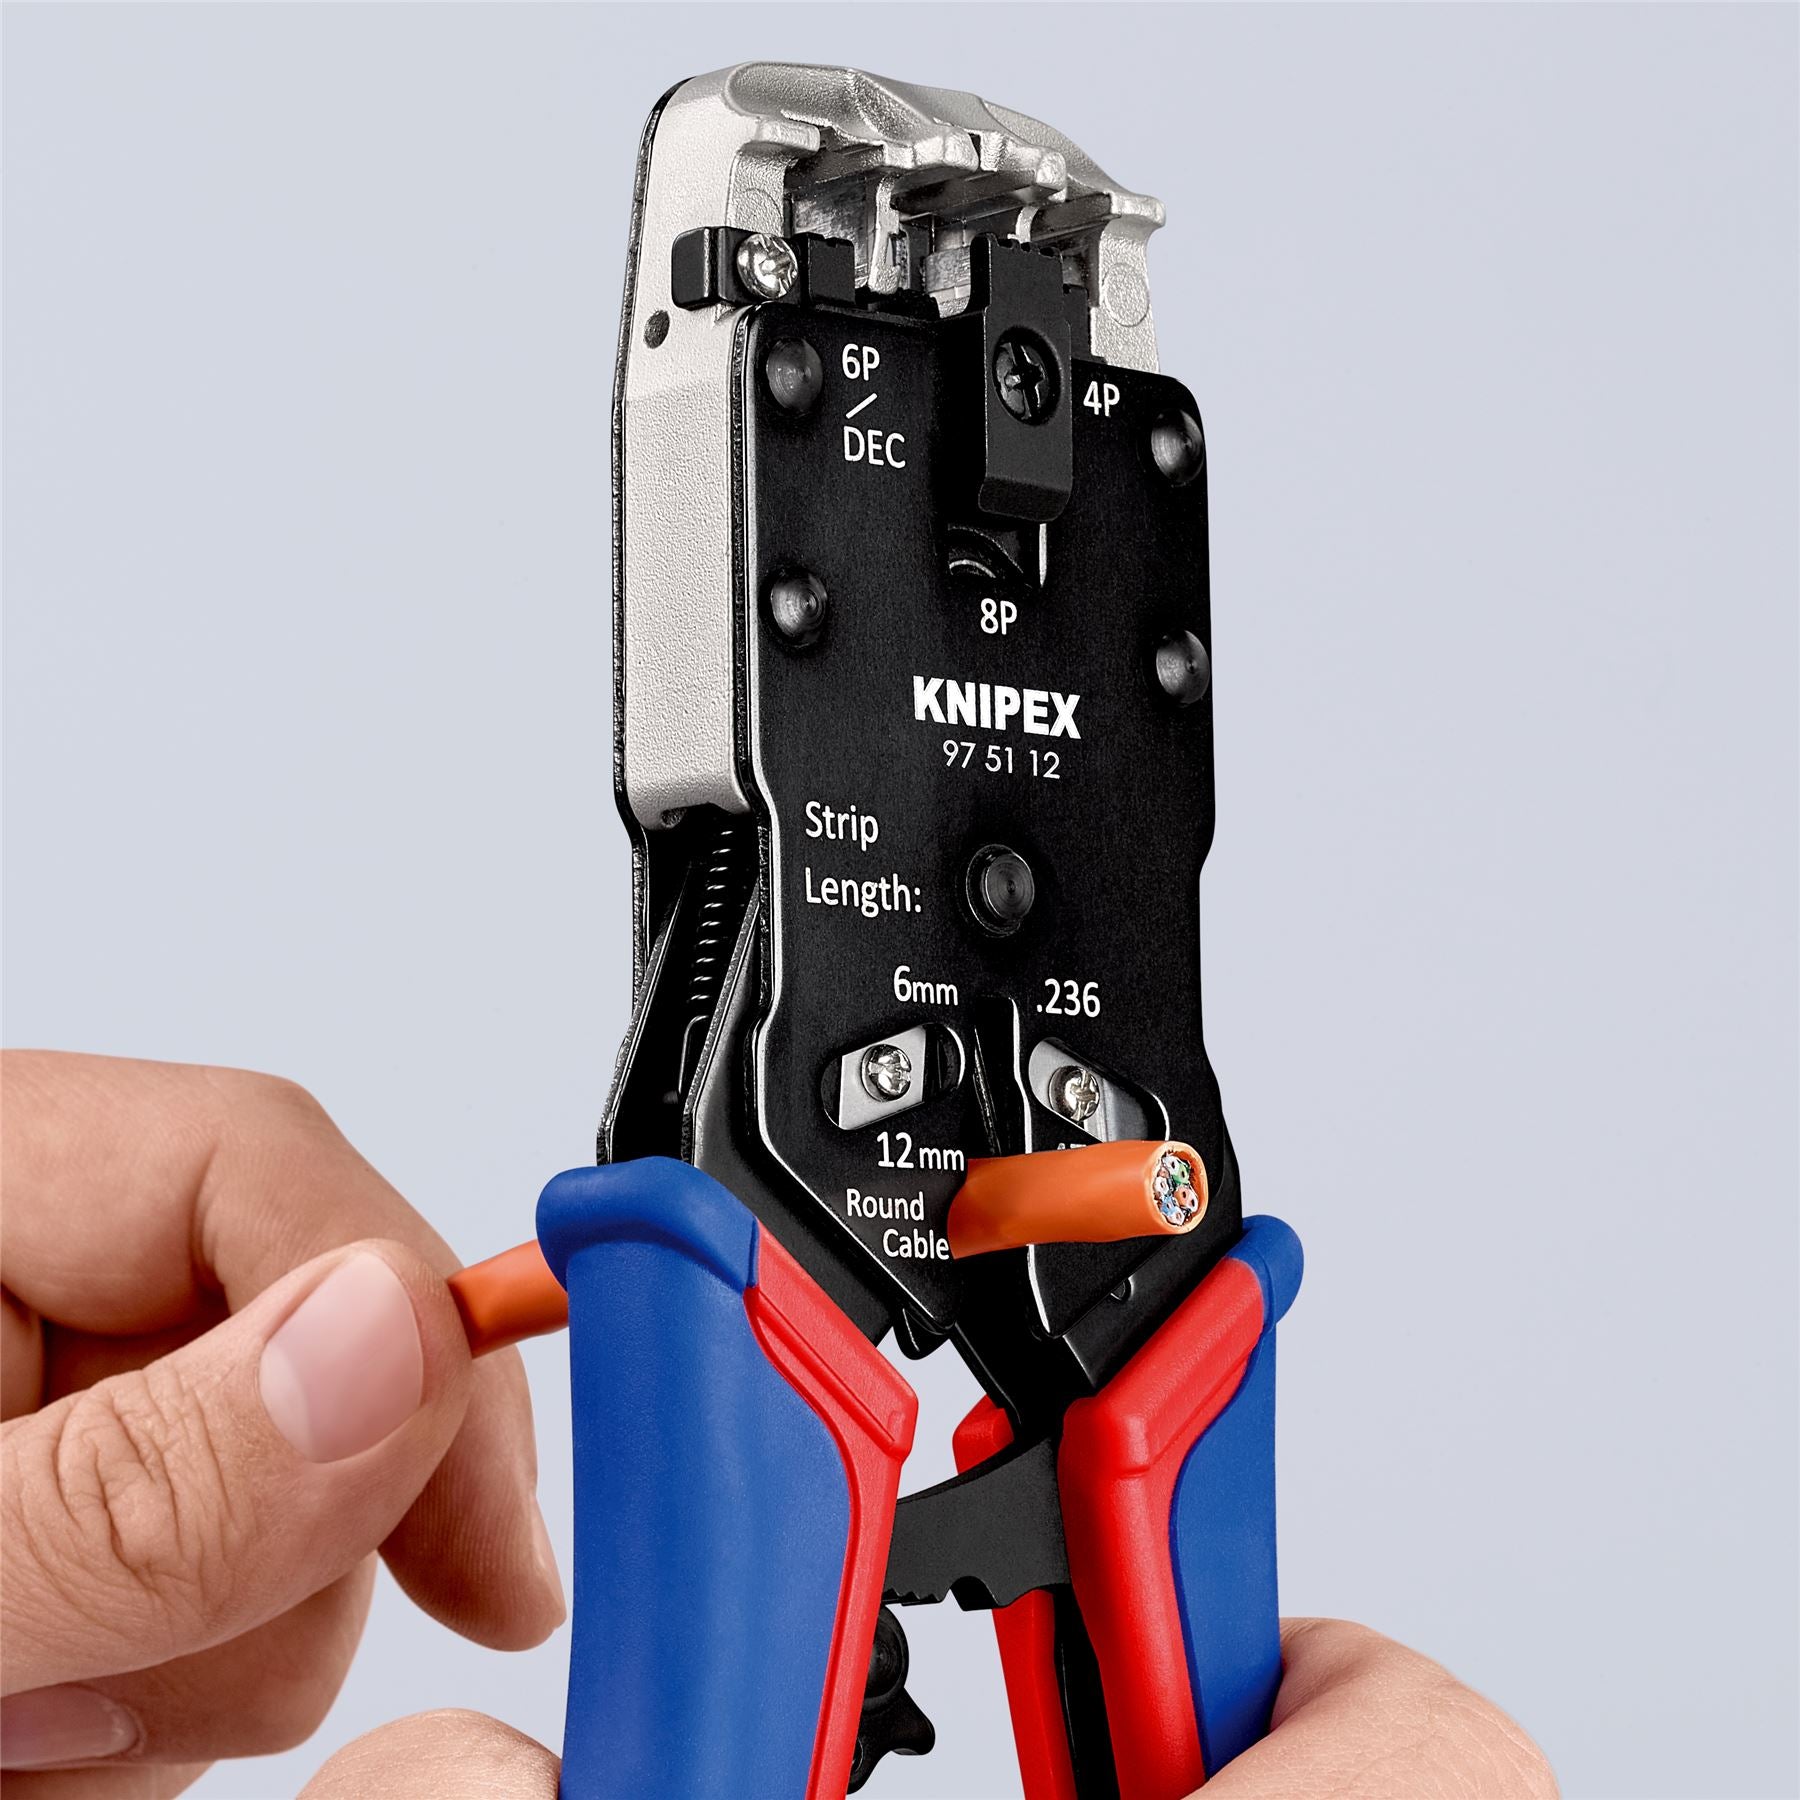 KNIPEX Crimping Pliers for Western Plugs RJ45 RJ10 RJ11 RJ12 200mm Multi Component Grips 97 51 12